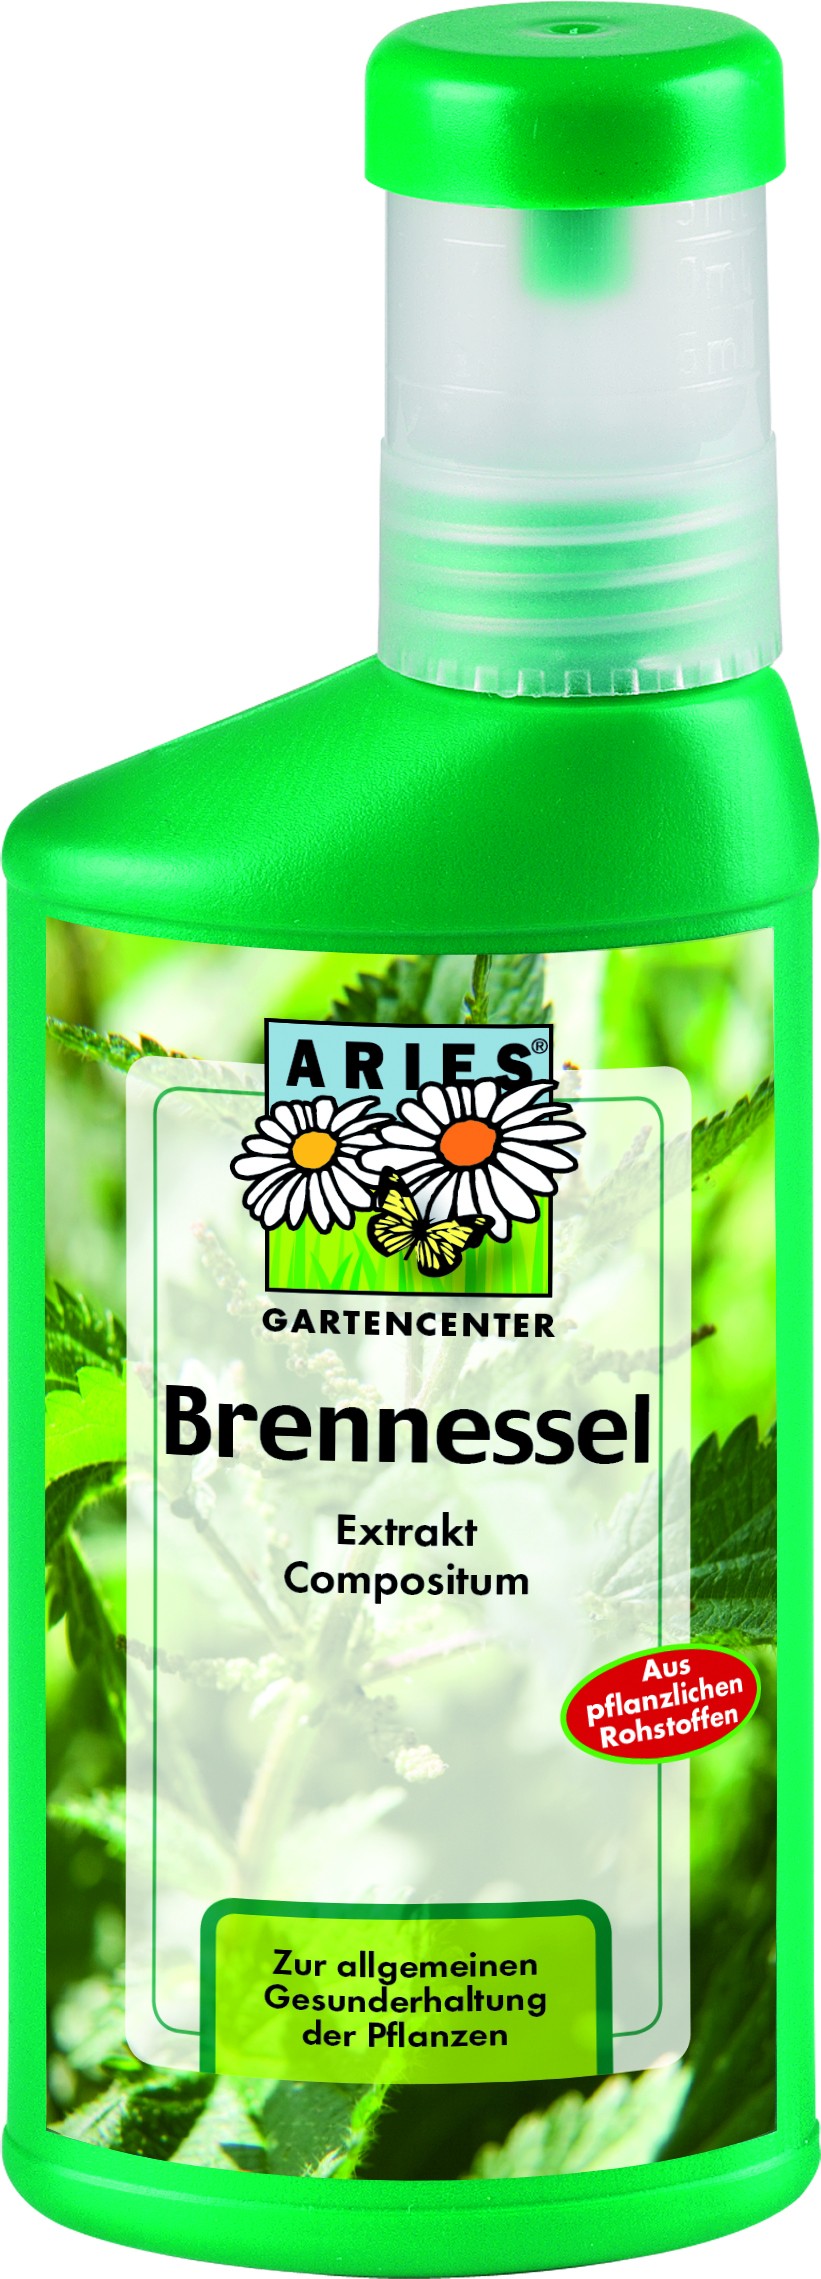 Aries Brennessel Extrakt Compositum